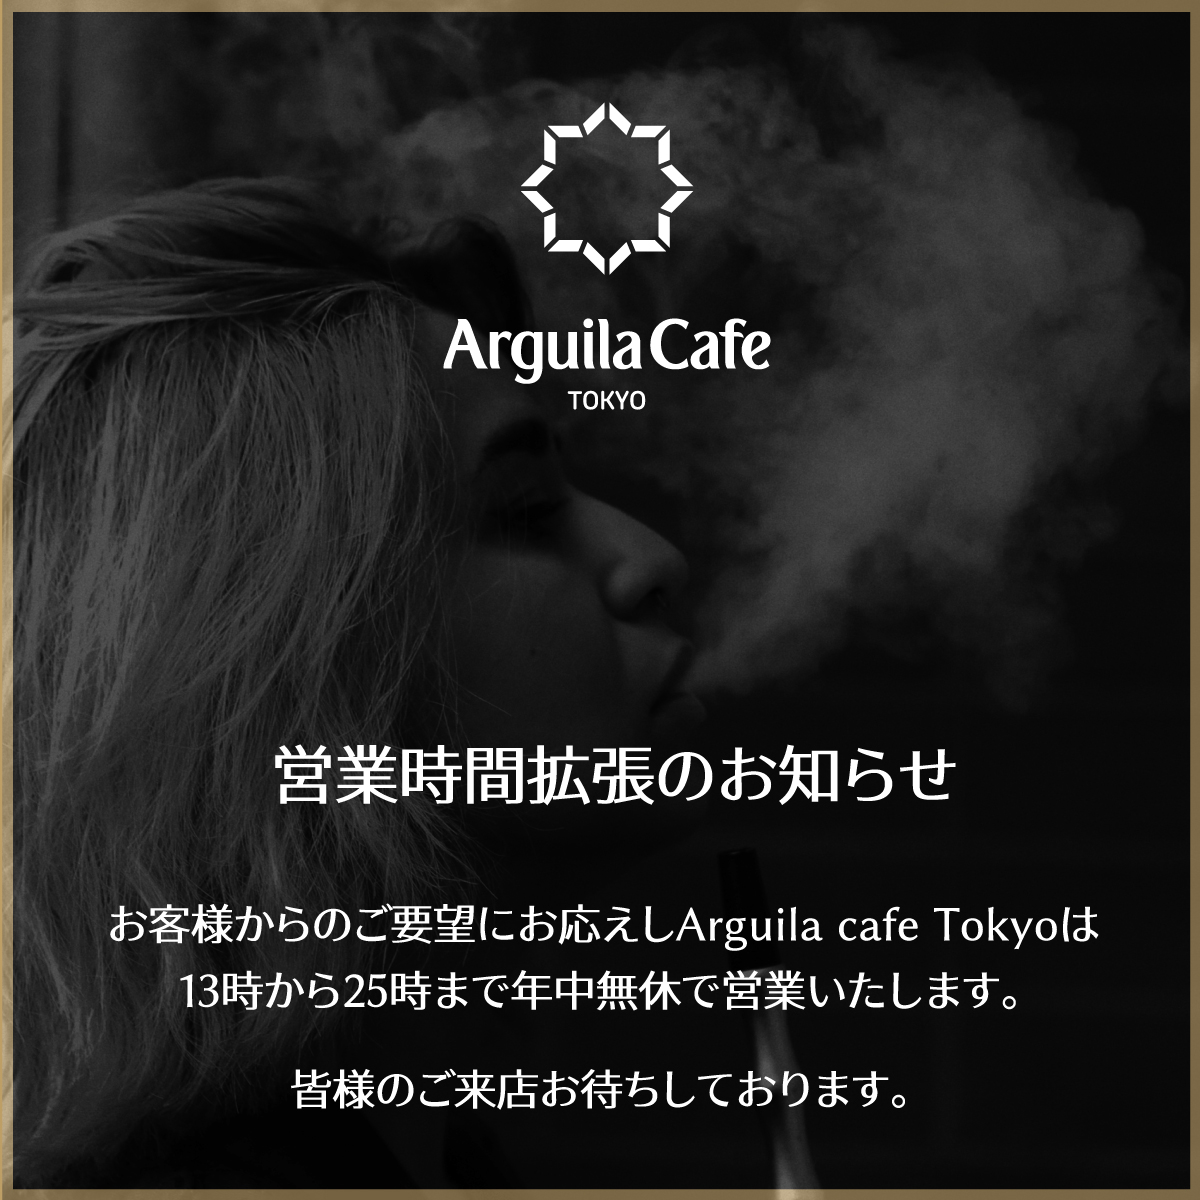 Arguila cafe Tokyo